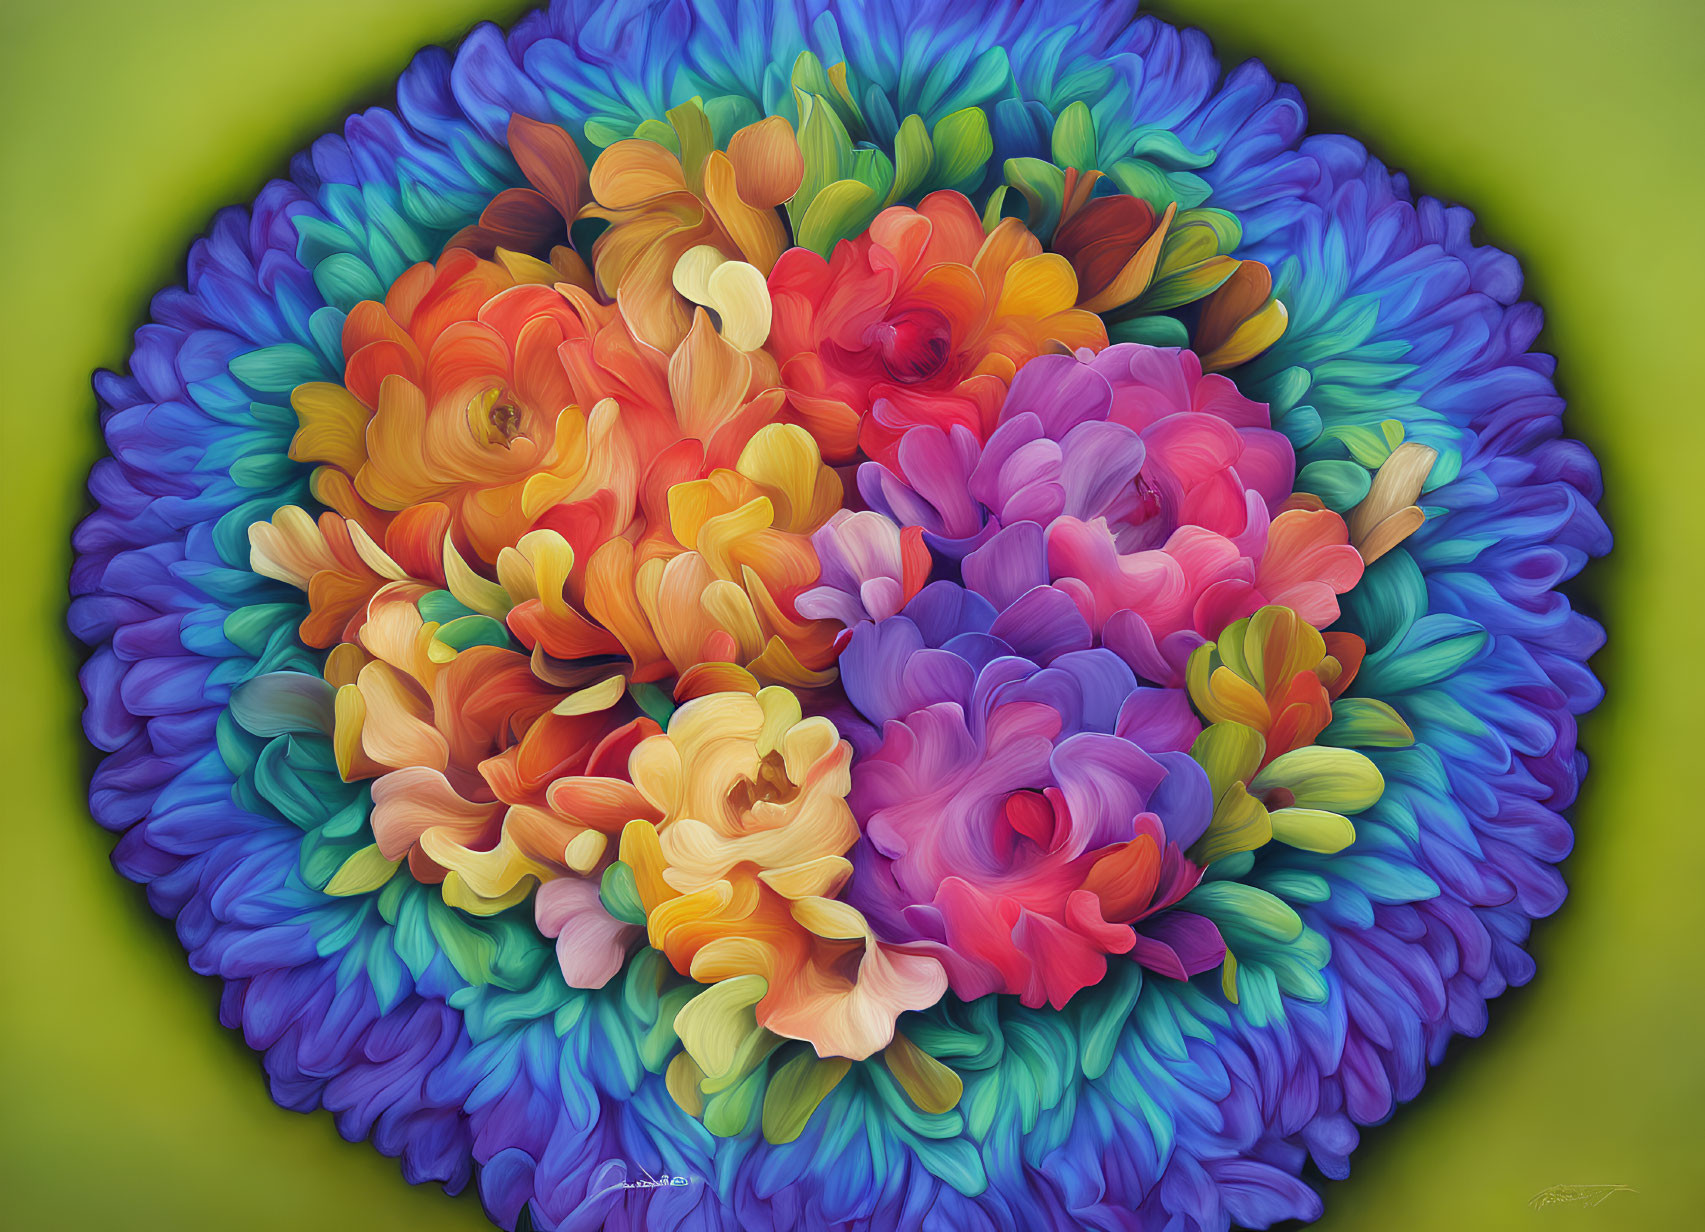 Colorful 3D floral arrangement in blue, orange, pink, and green